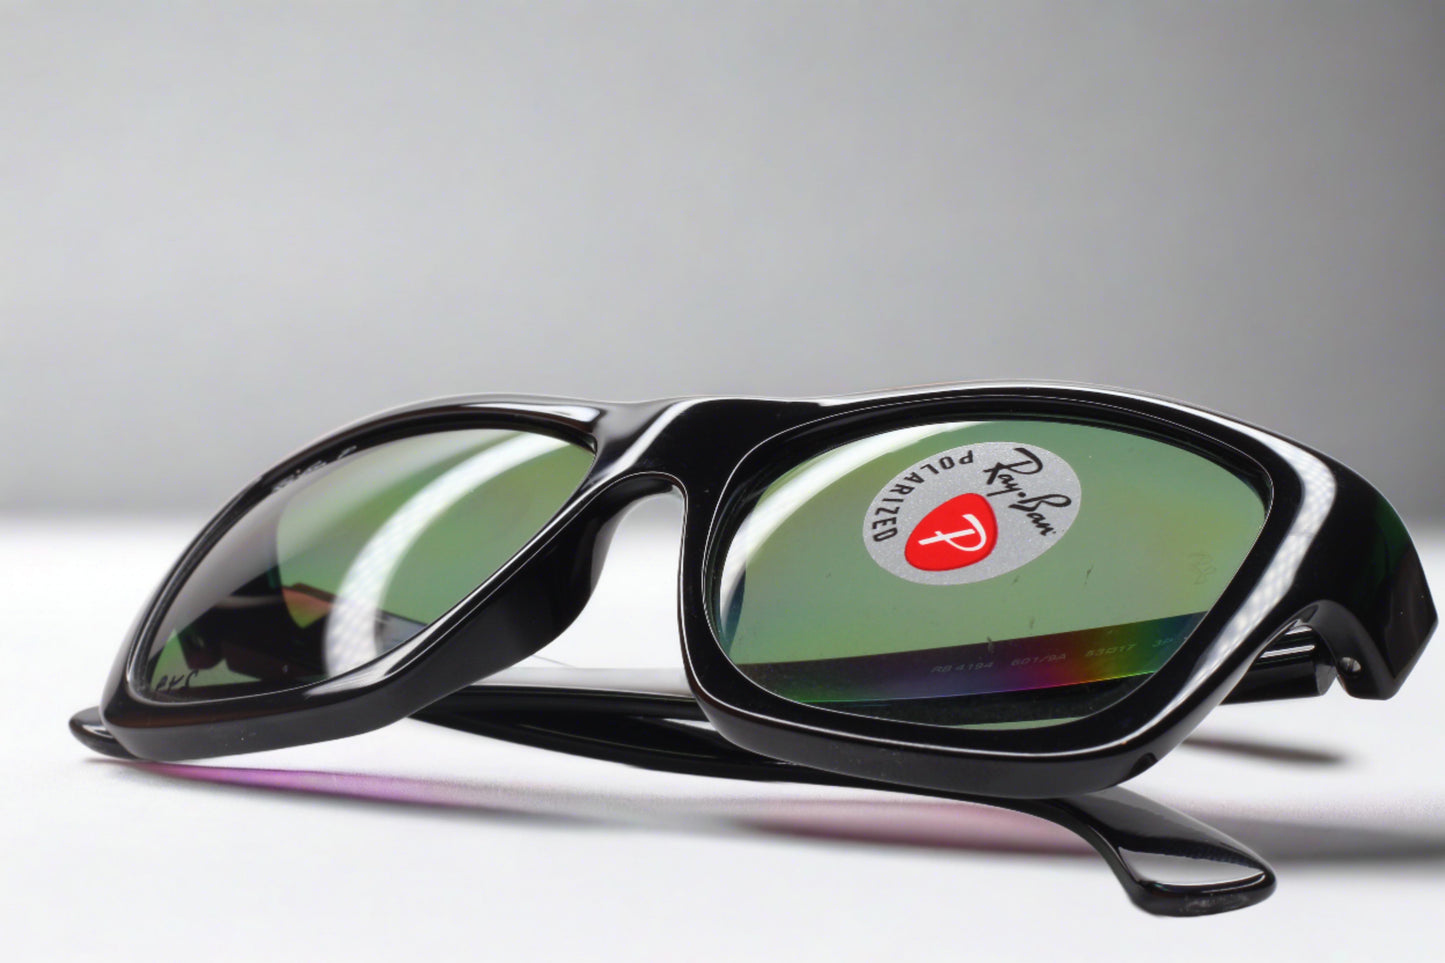 Ray-Ban RB4194 601/9A Polarized Designer Acetate Green Luxury Sunglasses - ABC Optical